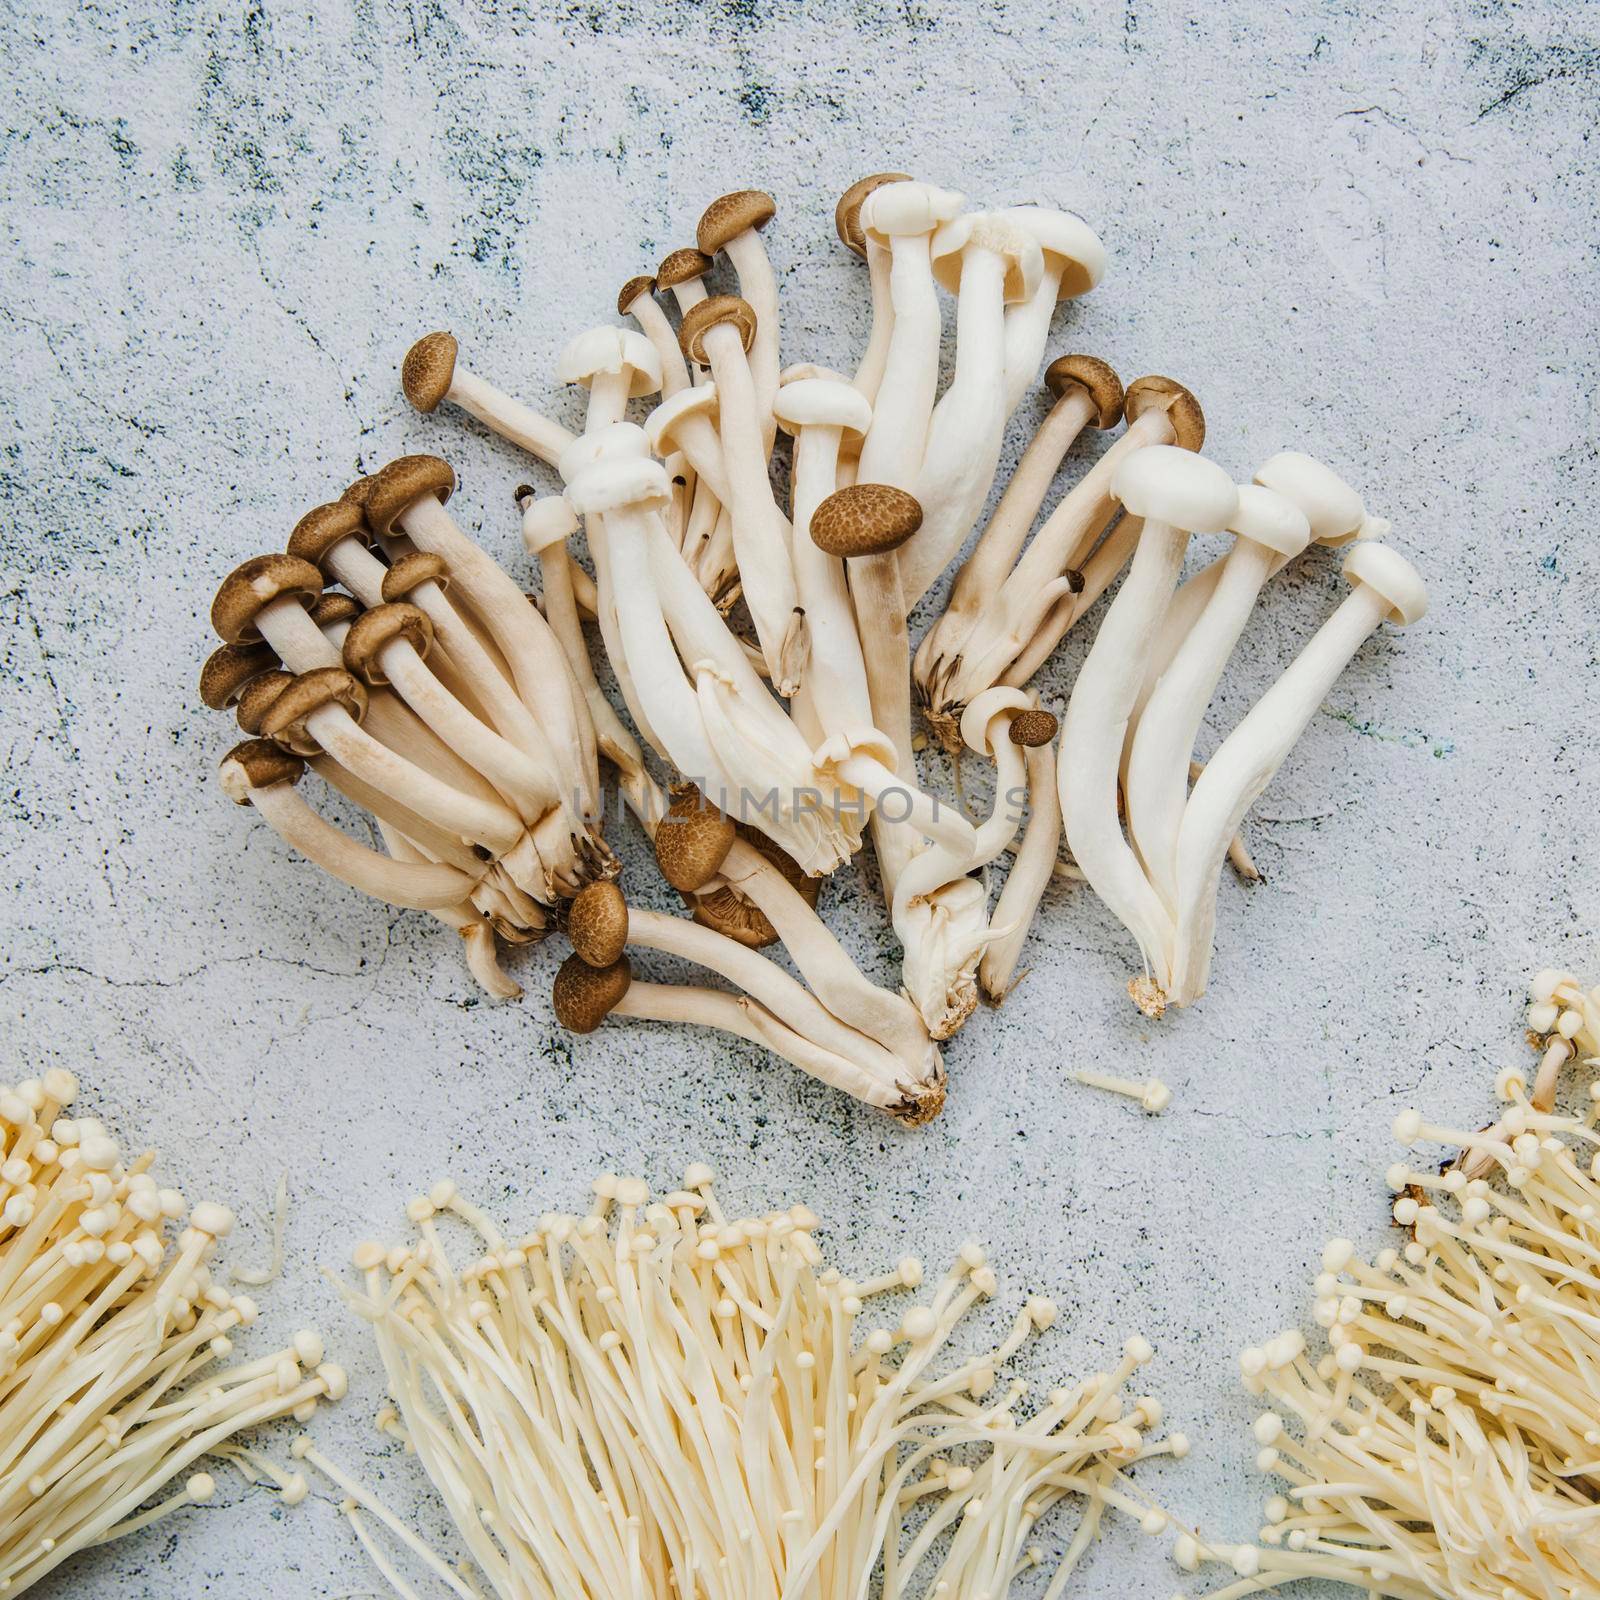 edible mushrooms arrange floor